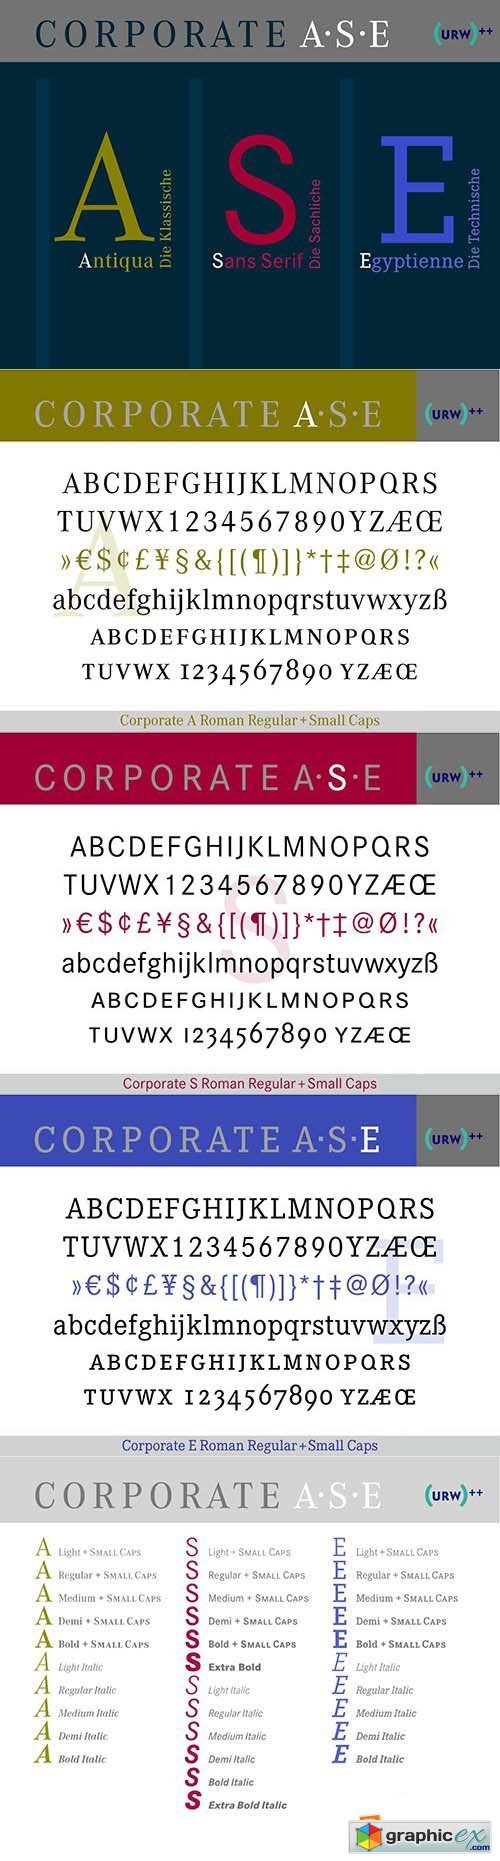 Corporate A S E Typeface Trilogy Font Collection - 53 Font $4770